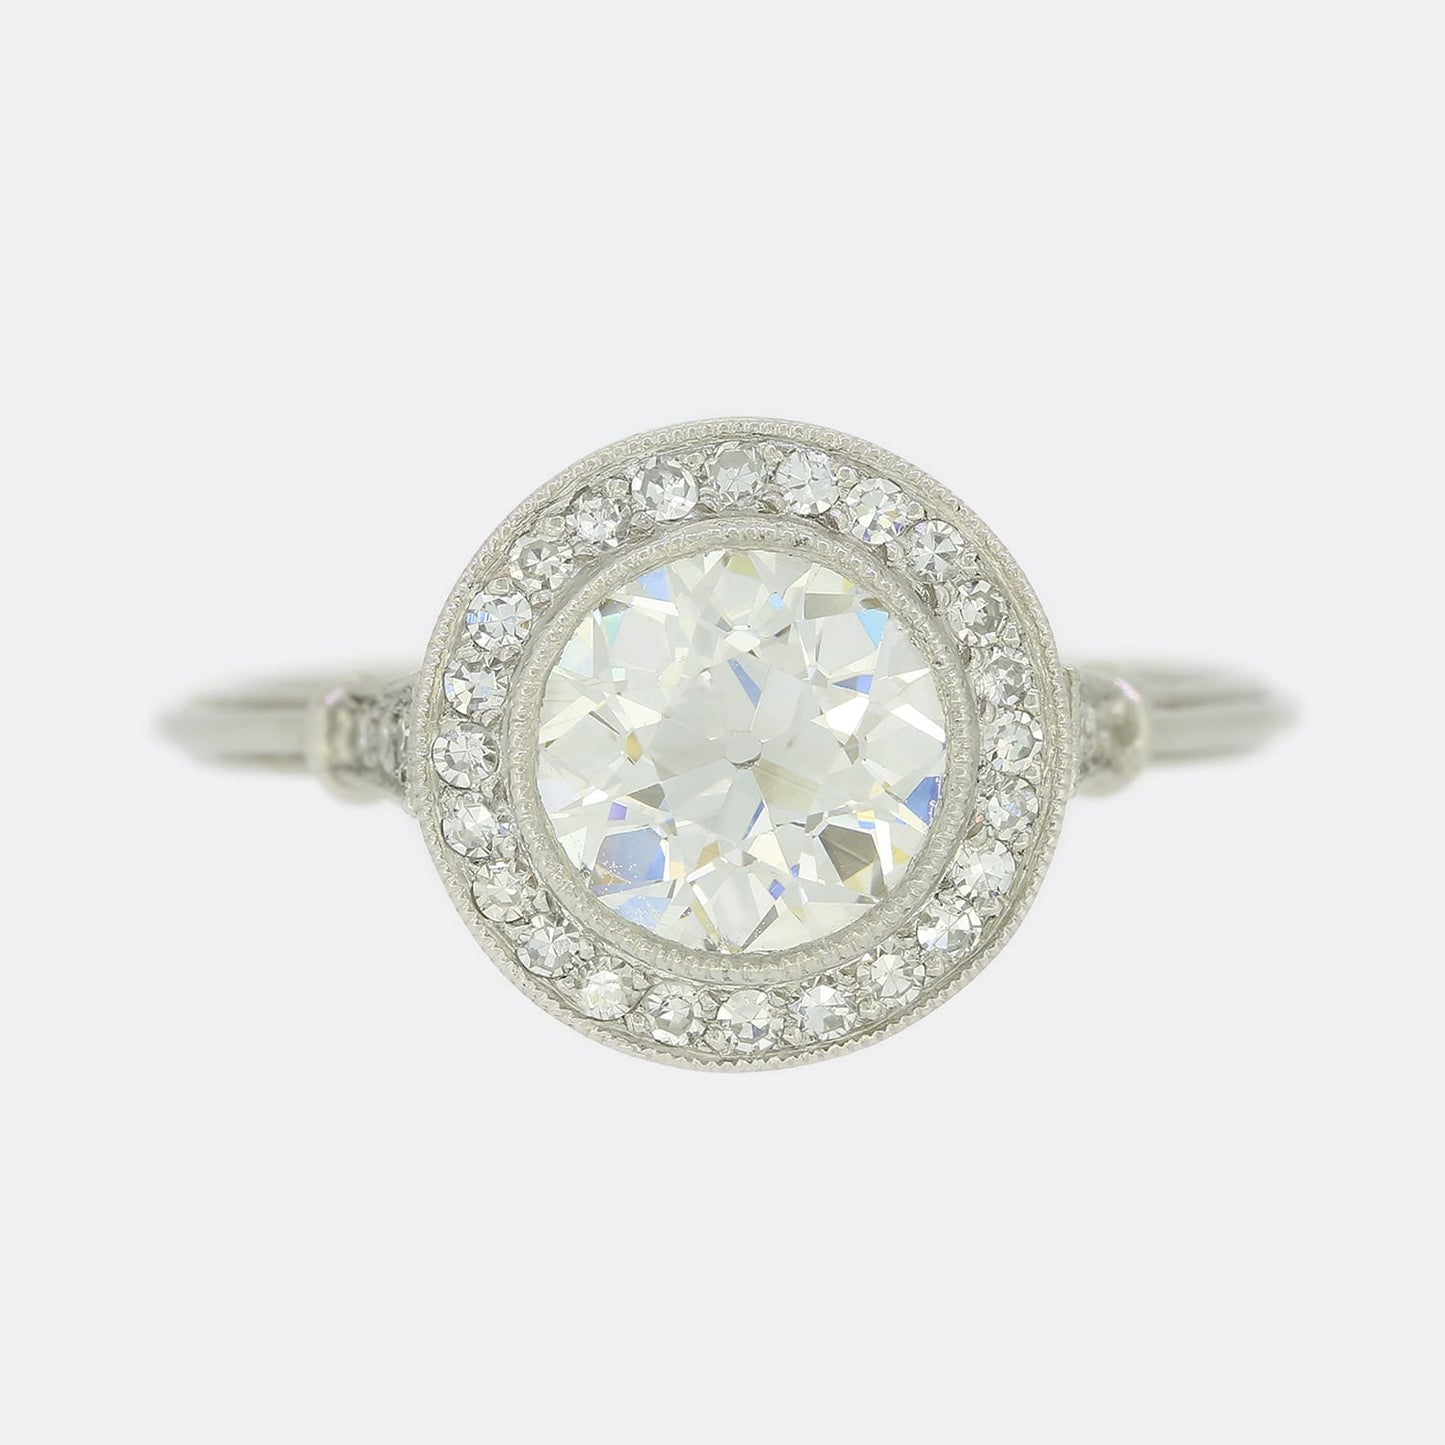 Art Deco Style 1.20 Carat Old Cut Diamond Cluster Ring